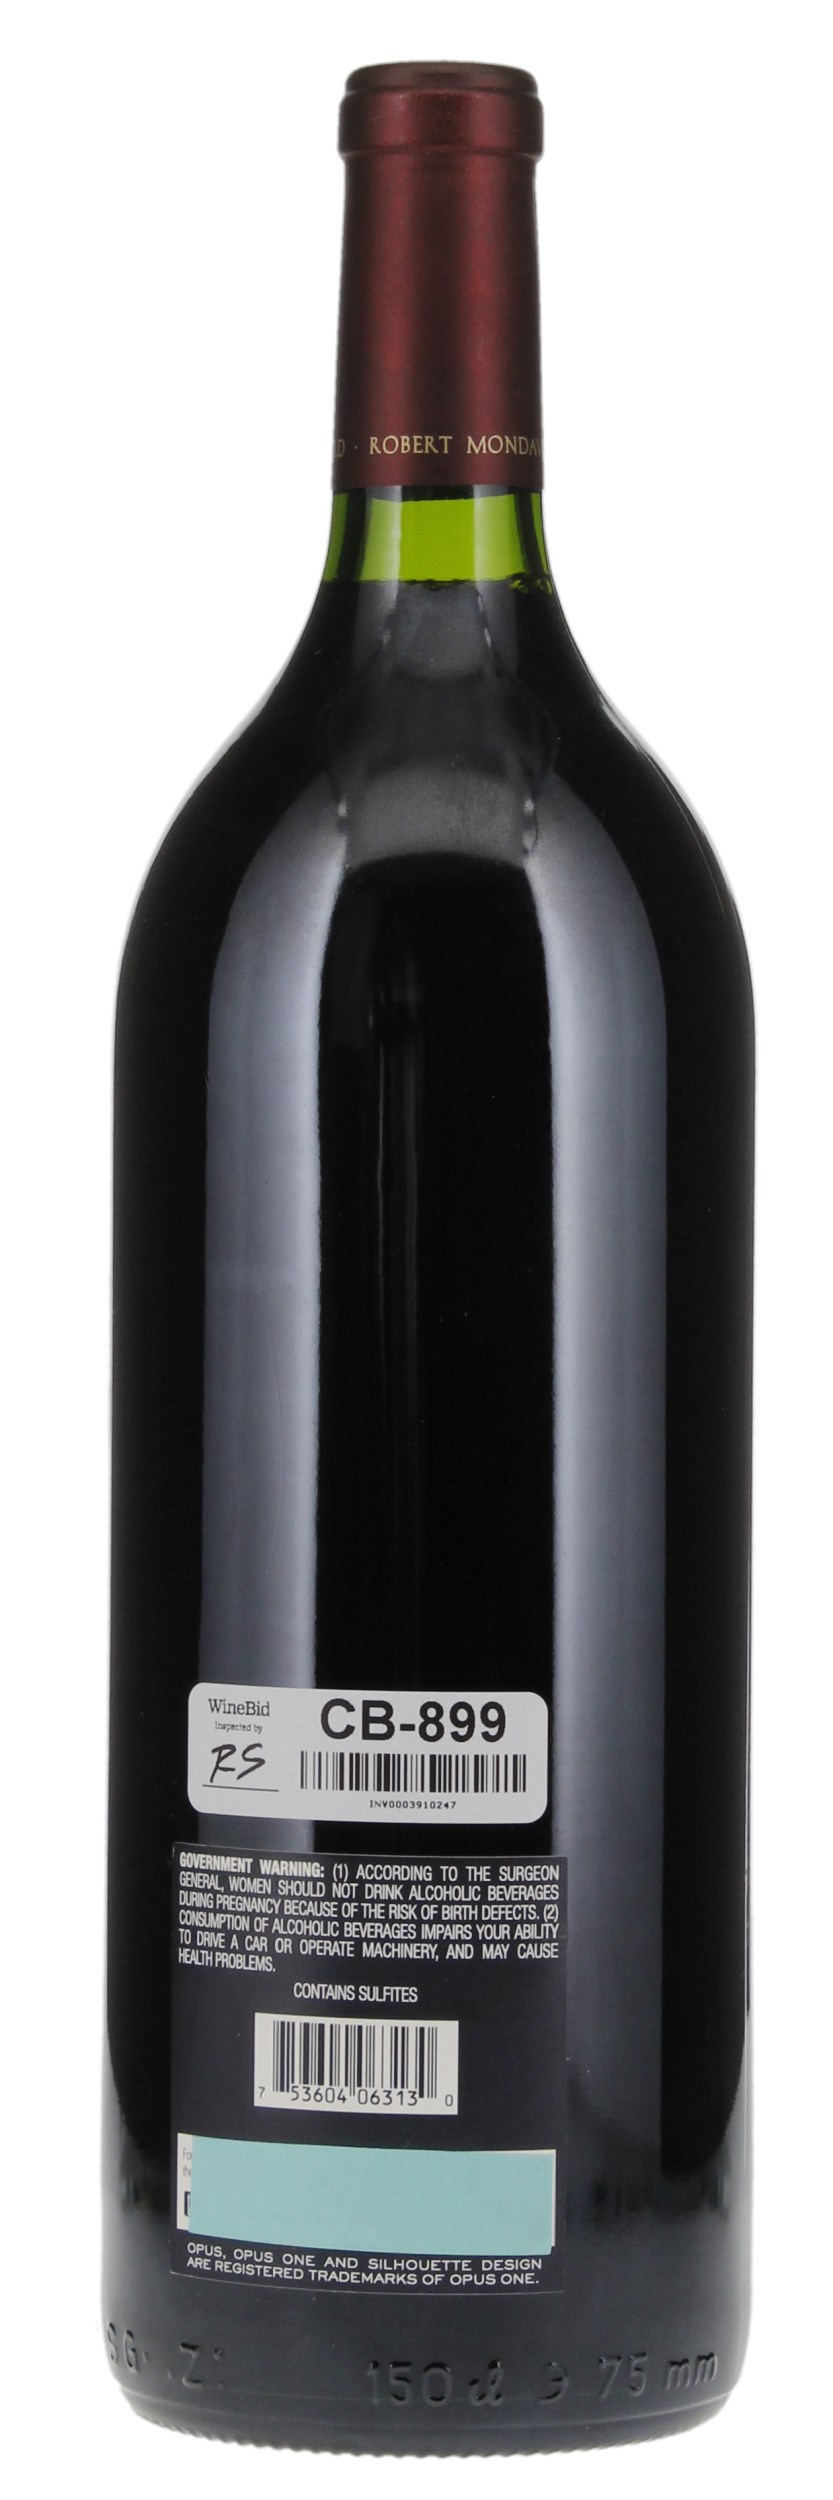 2013 Opus One Red Wine, Cabernet Sauvignon Blend | WineBid